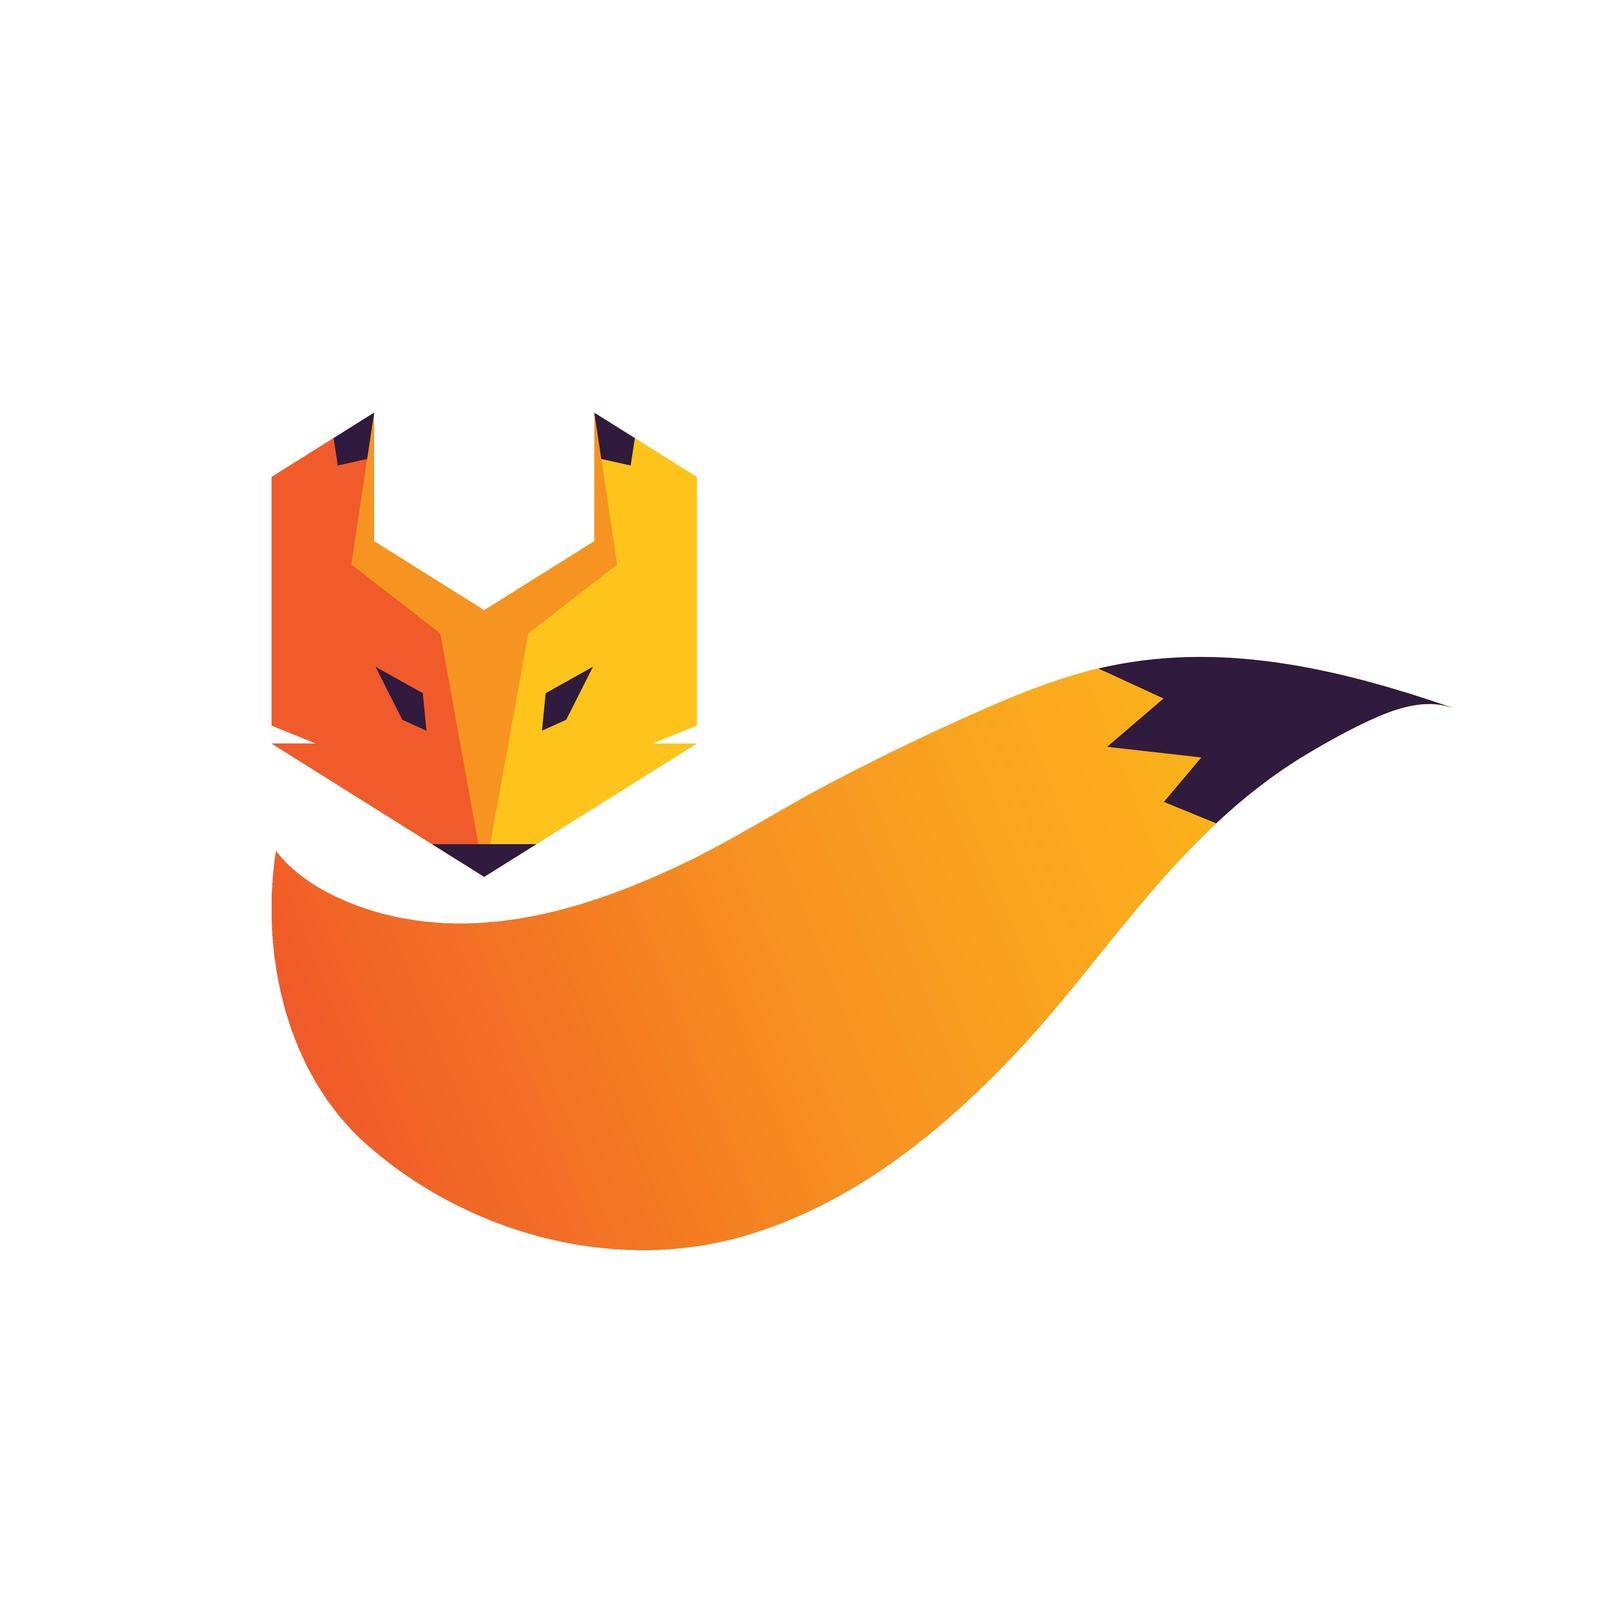 Fox head and tail logo. Vector illustration